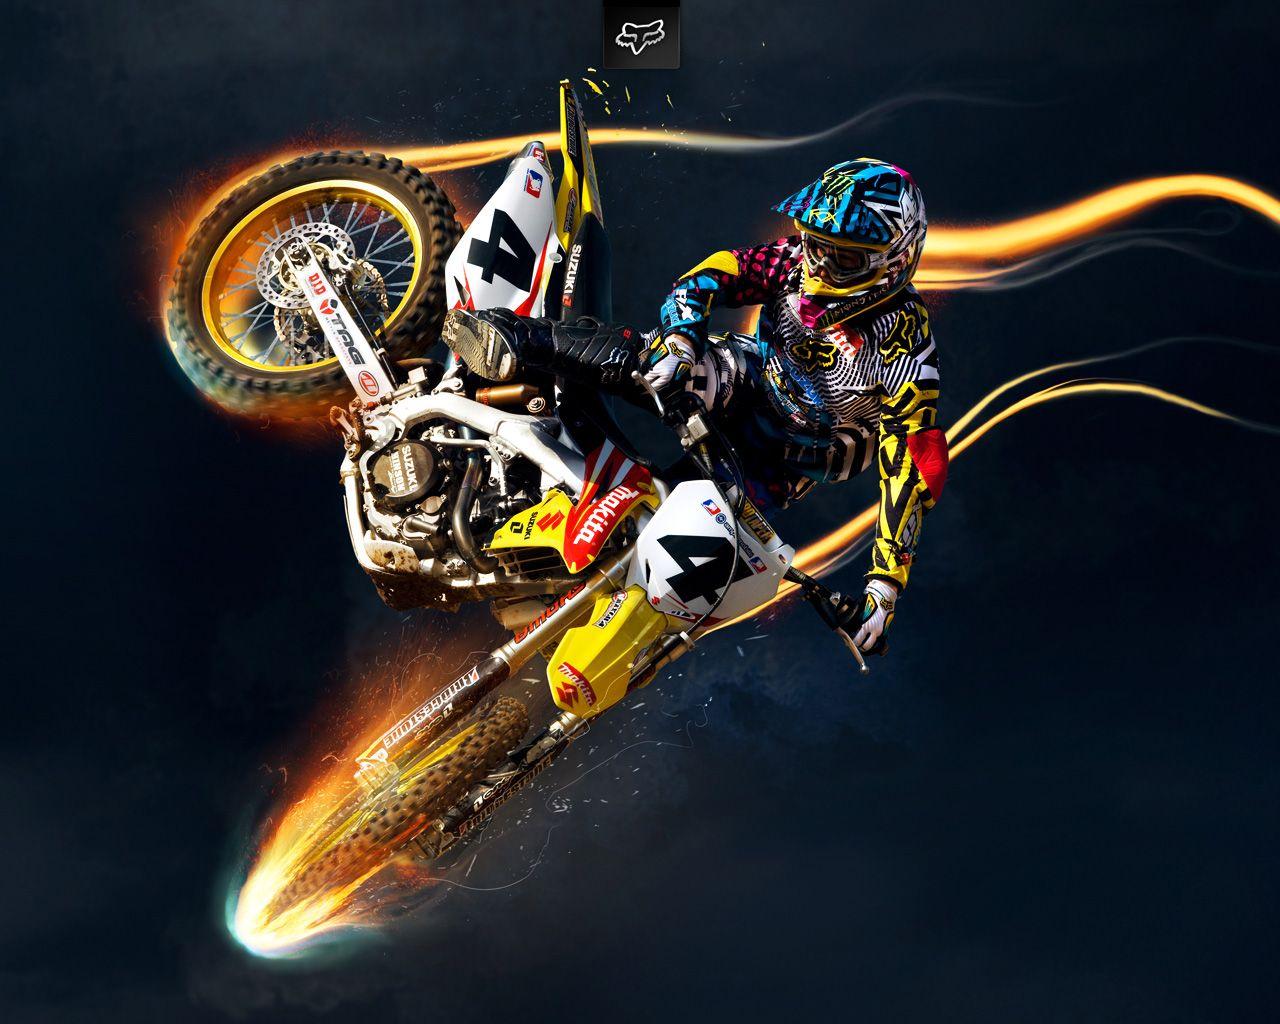 Download Kawasaki KLX Motocross Wallpaper free desktop background